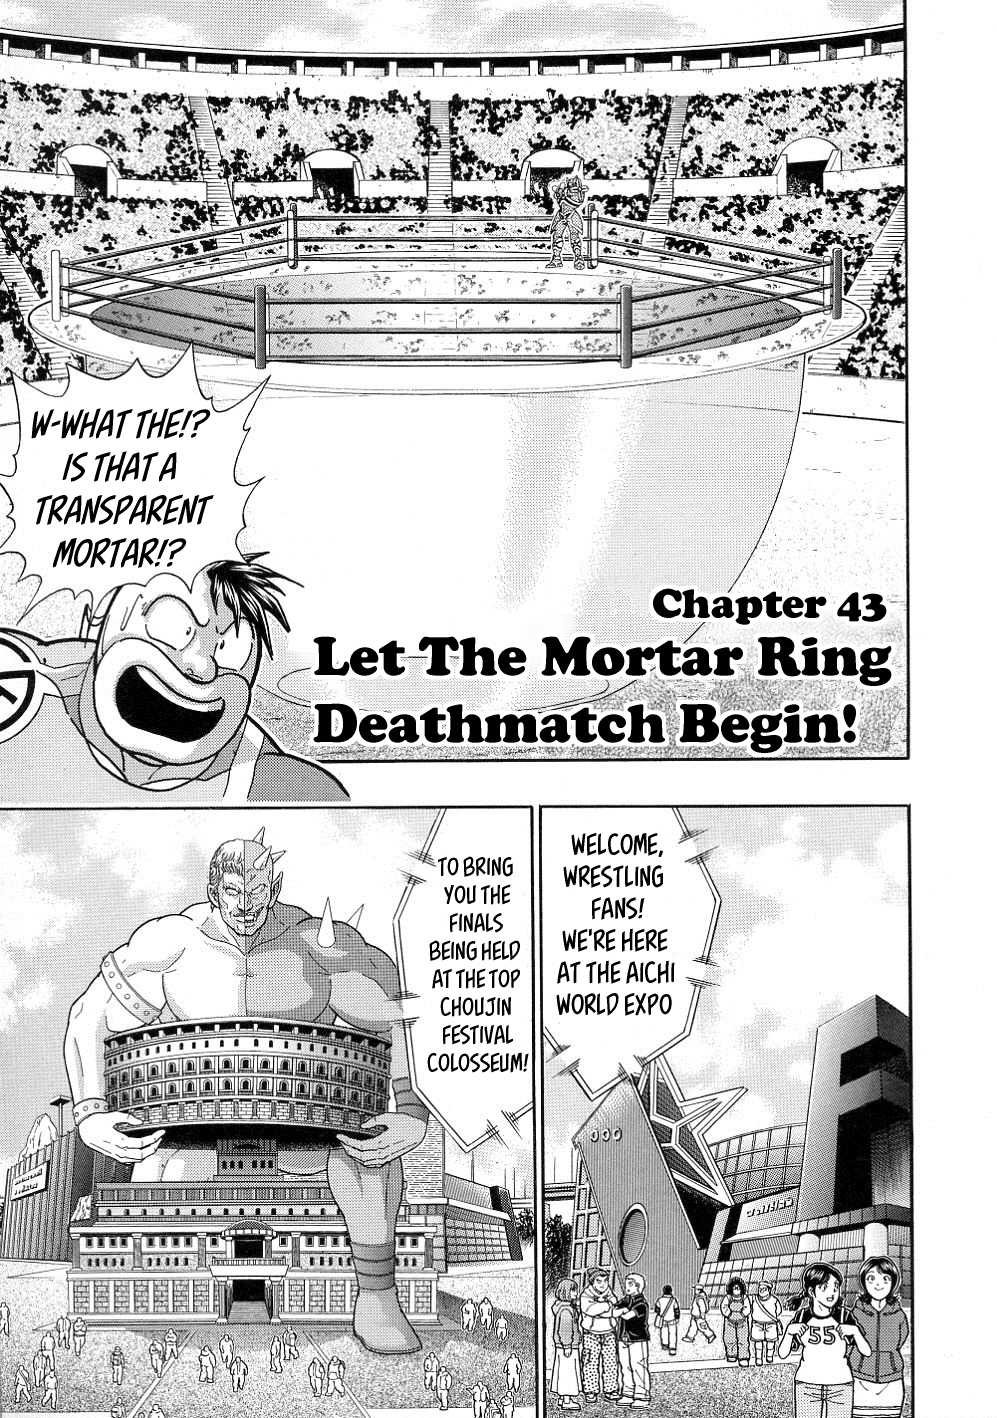 Kinnikuman II Sei: All Choujin Daishingeki Vol. 3 Ch. 43 Let The Mortar Ring Deathmatch Begin!